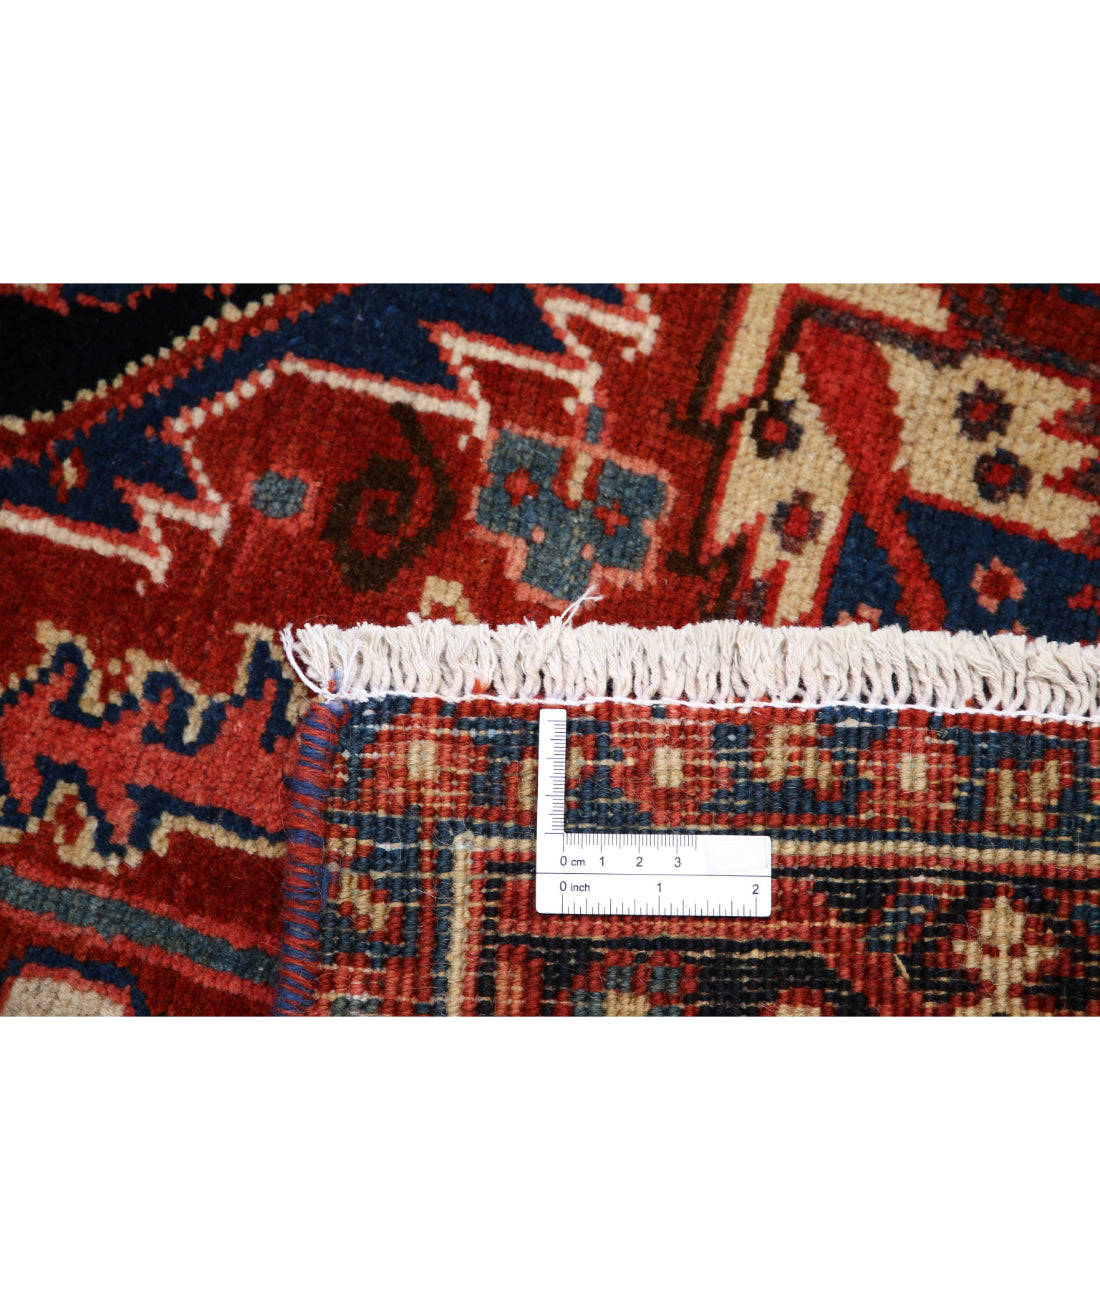 Hand Knotted Semi Antique Persian Heriz Wool Rug - 7'9'' x 11'4'' 7'9'' x 11'4'' (233 X 340) / Rust / Blue